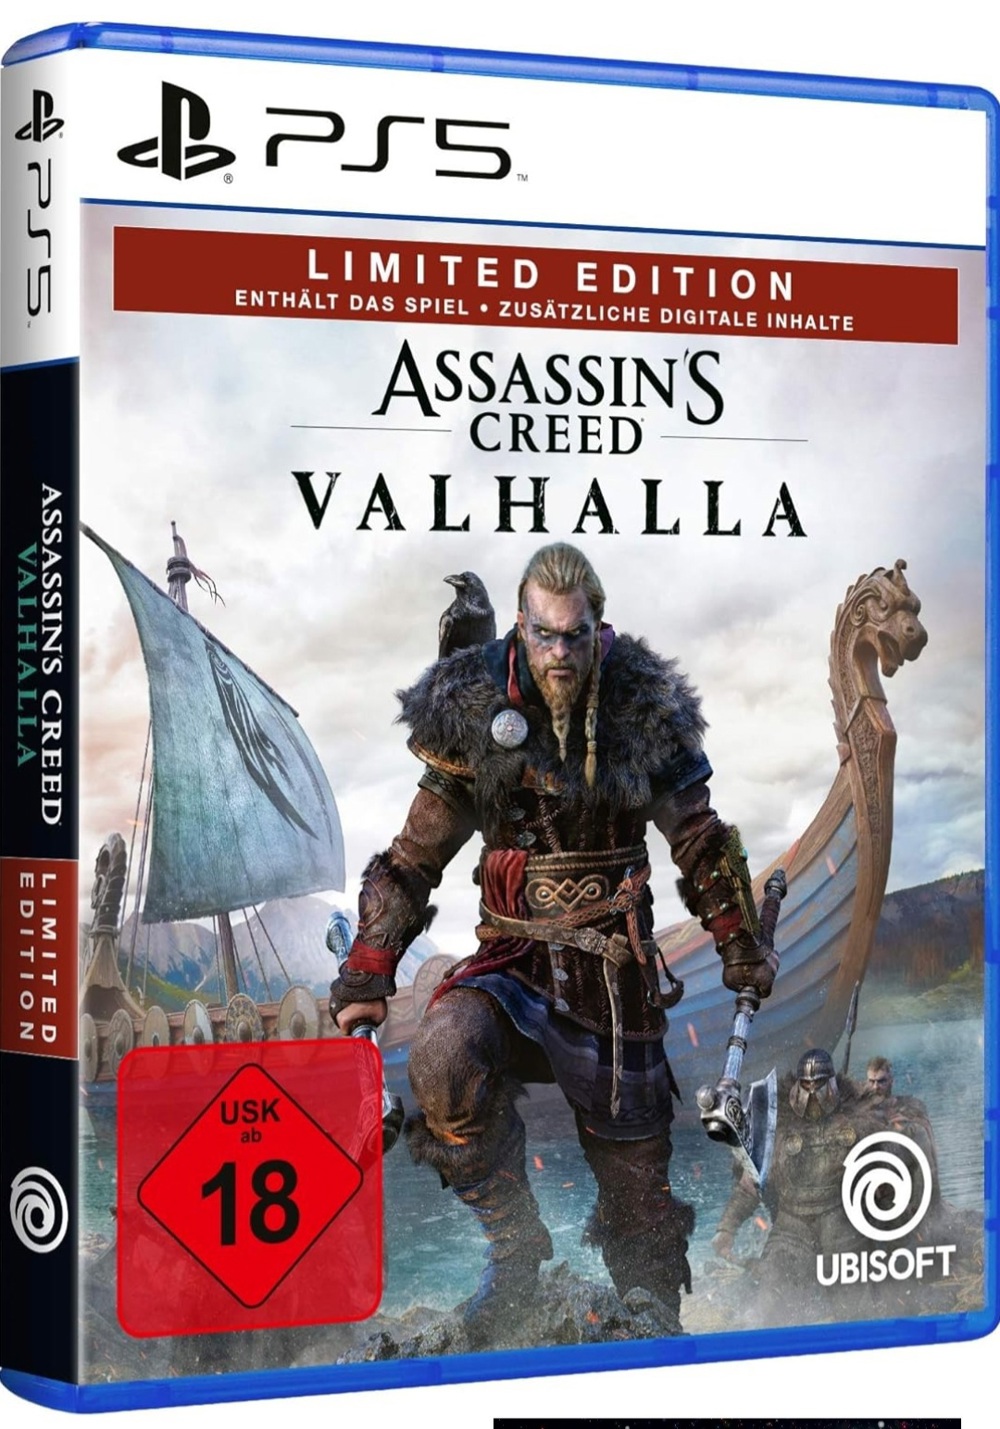 Assassins creed valhalla PS5 Playstation 5 Spiel  limited edition